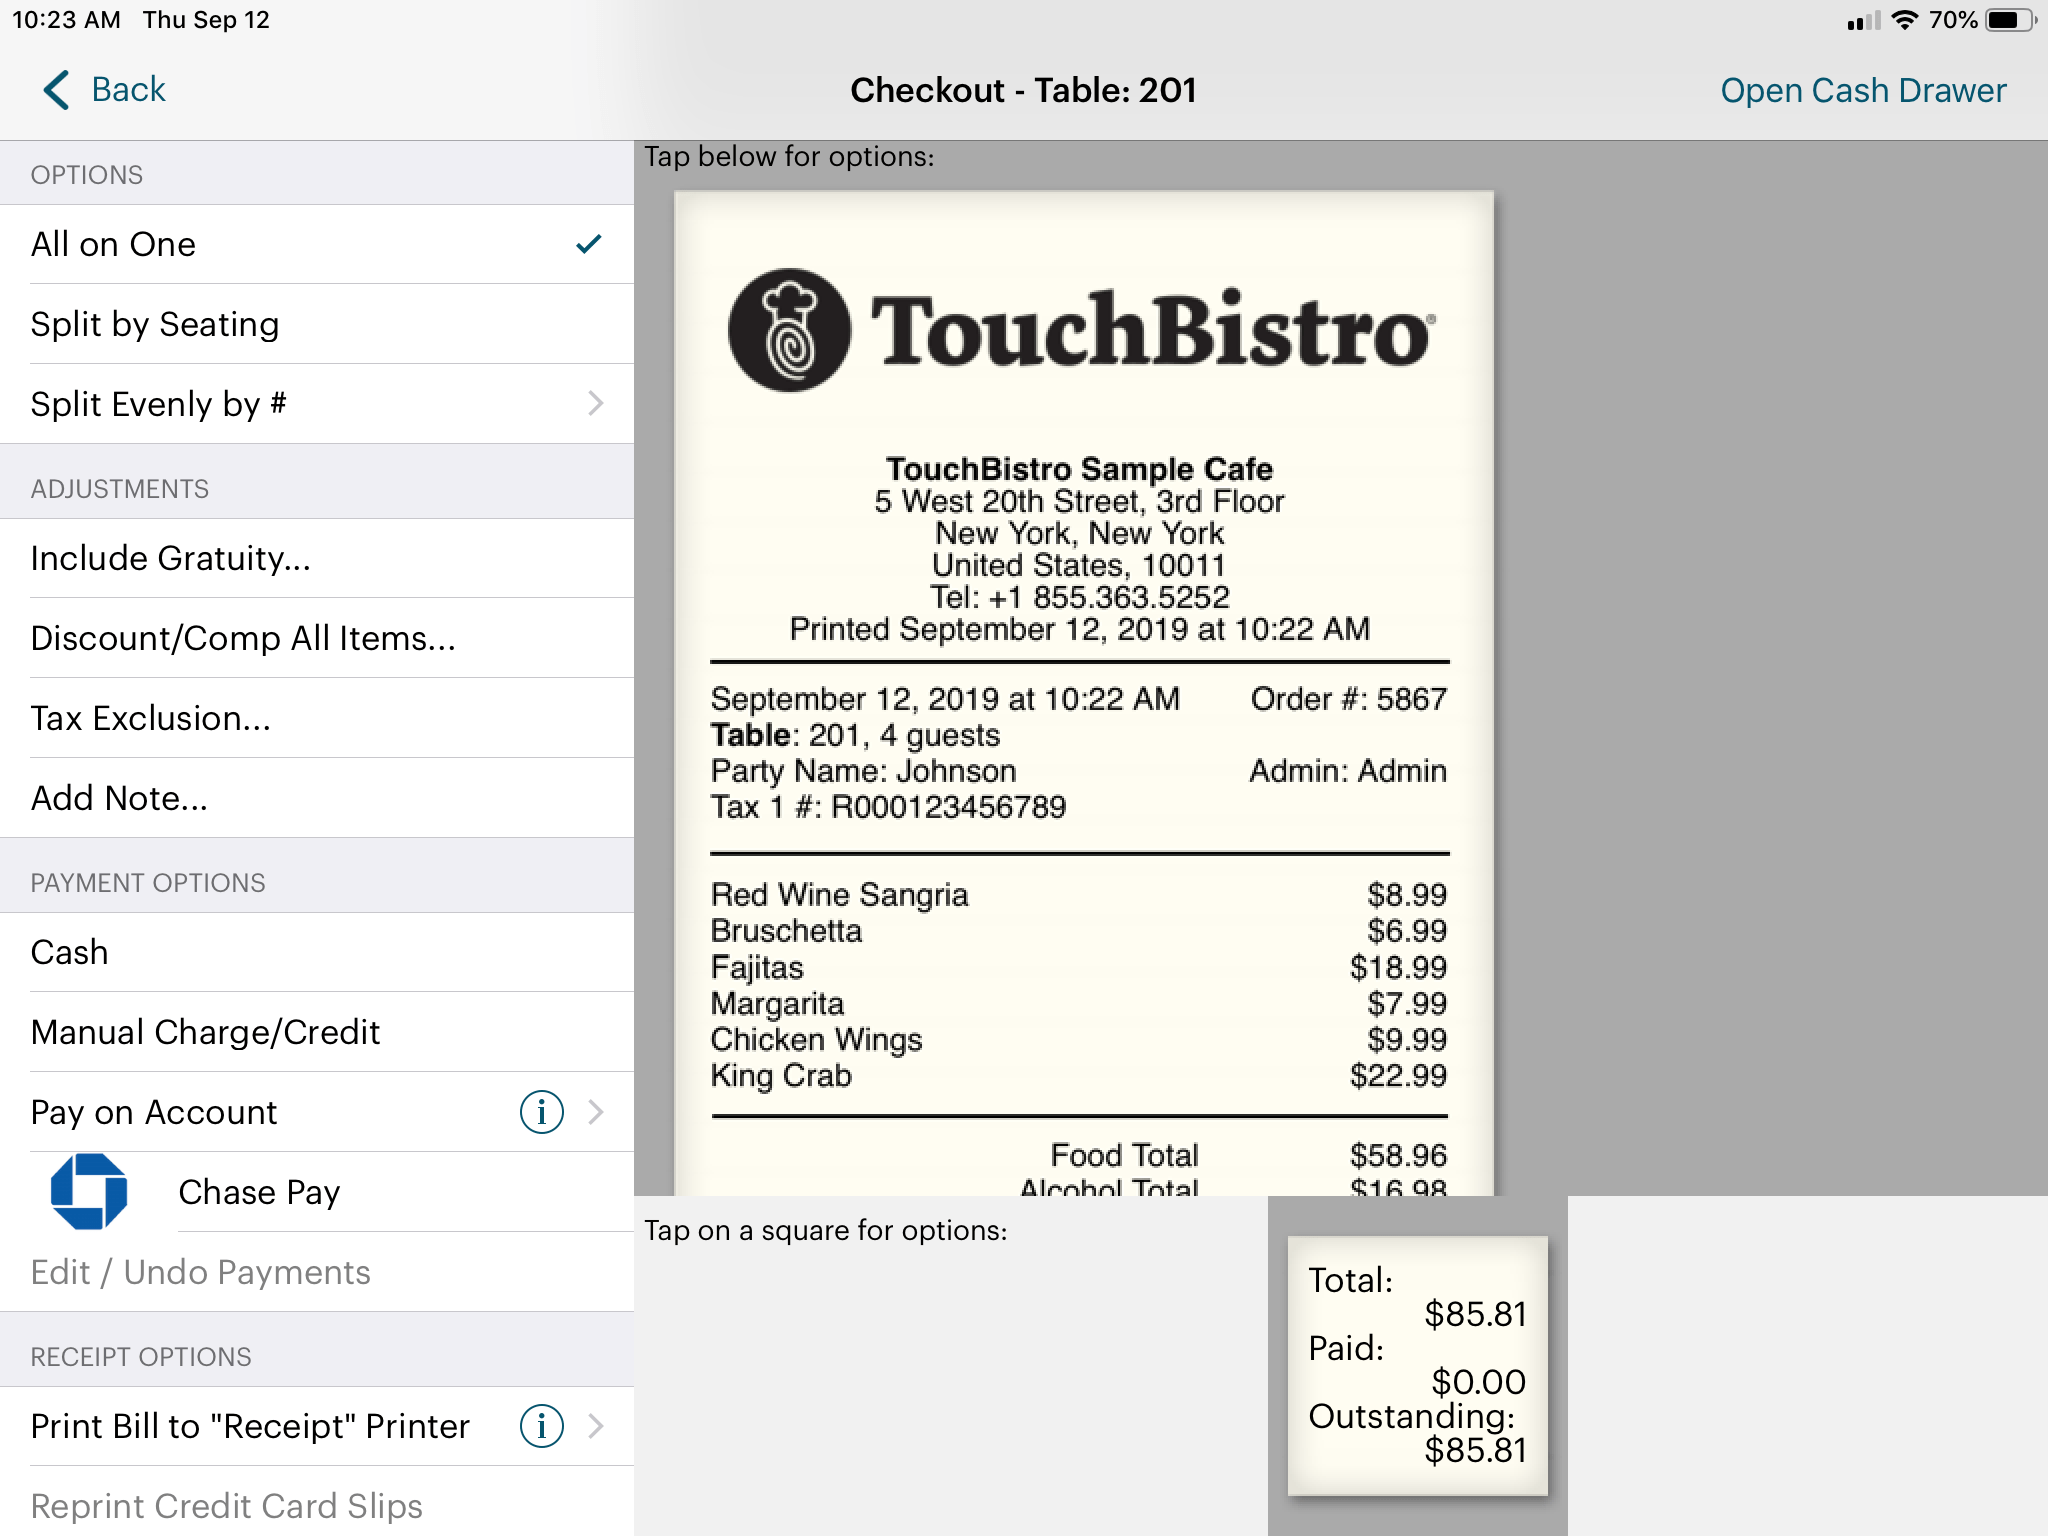 touchbistro pos checkout screen with digital receipt